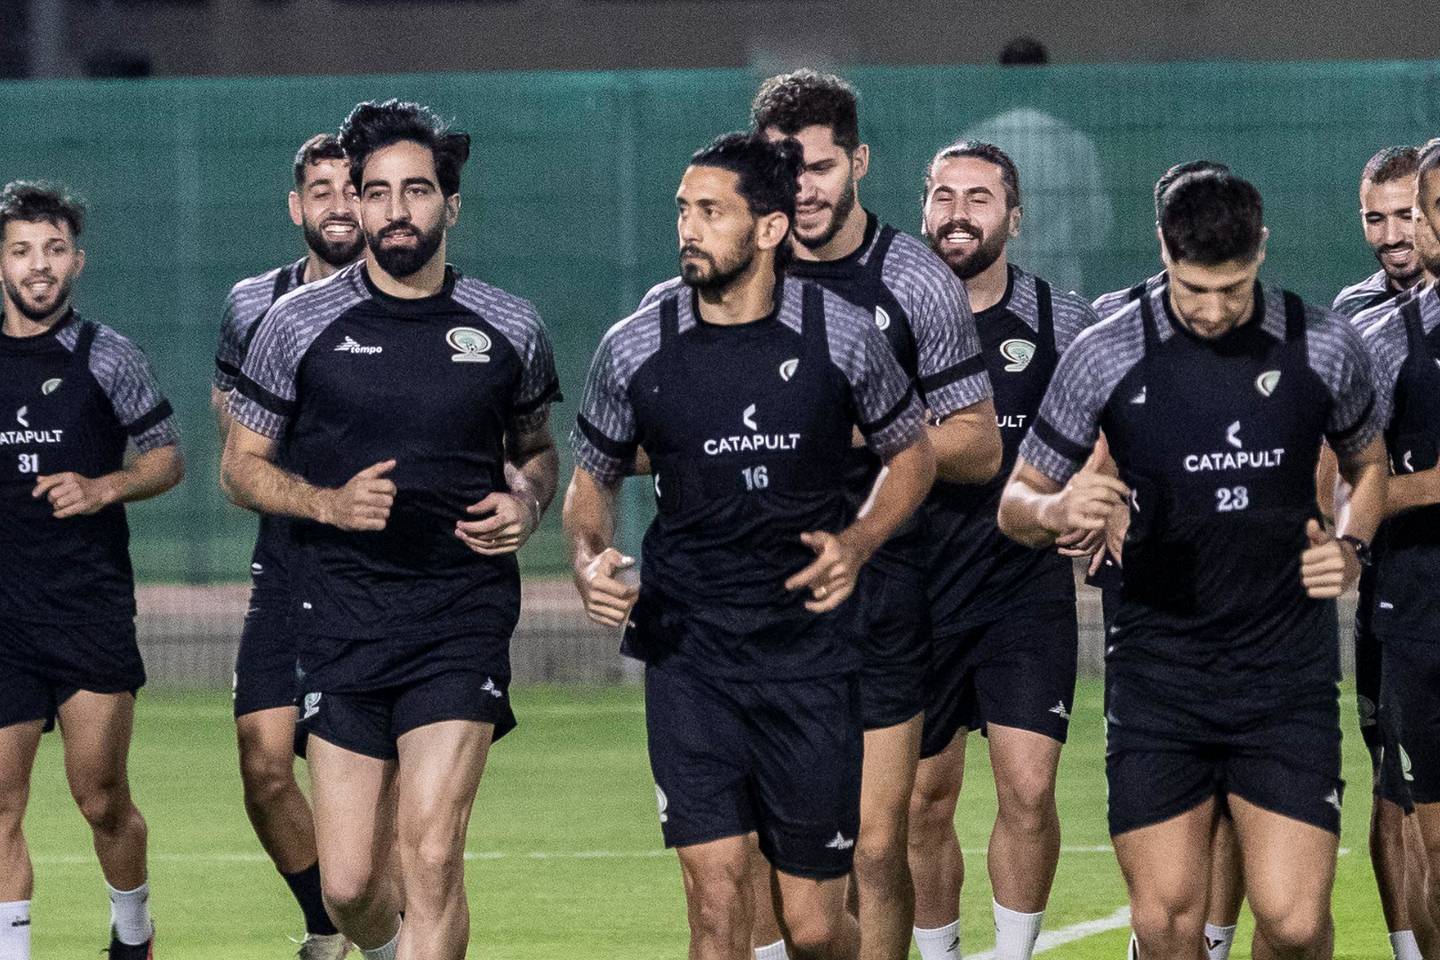 We fight through sports, says Palestinian footballer Mohammed Rashid